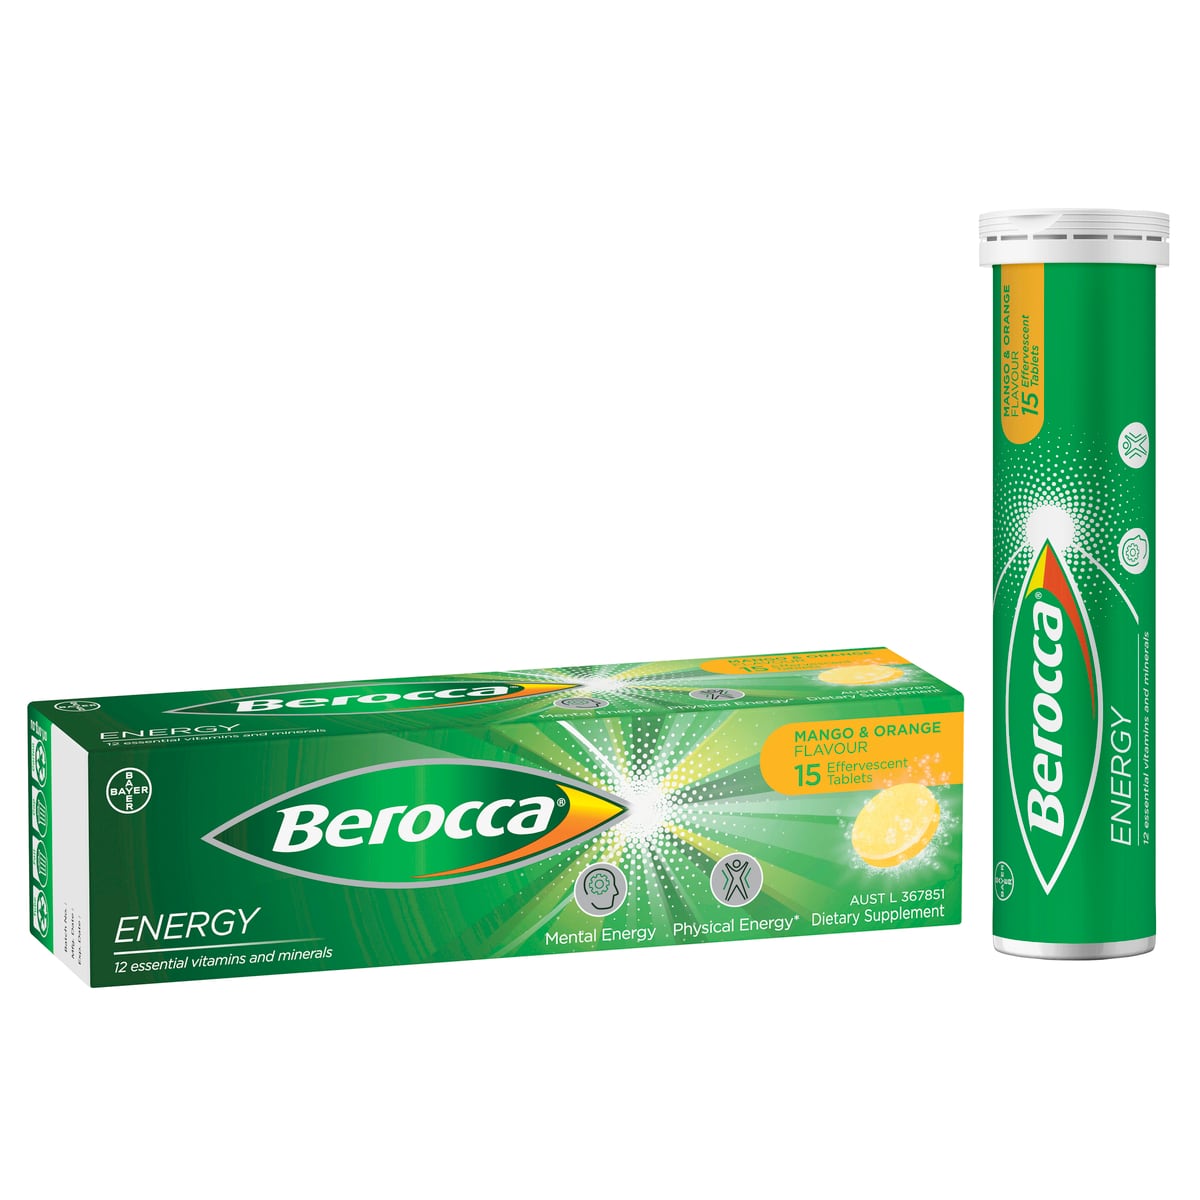 Berocca Energy Mango & Orange 15 Effervescent Tablets